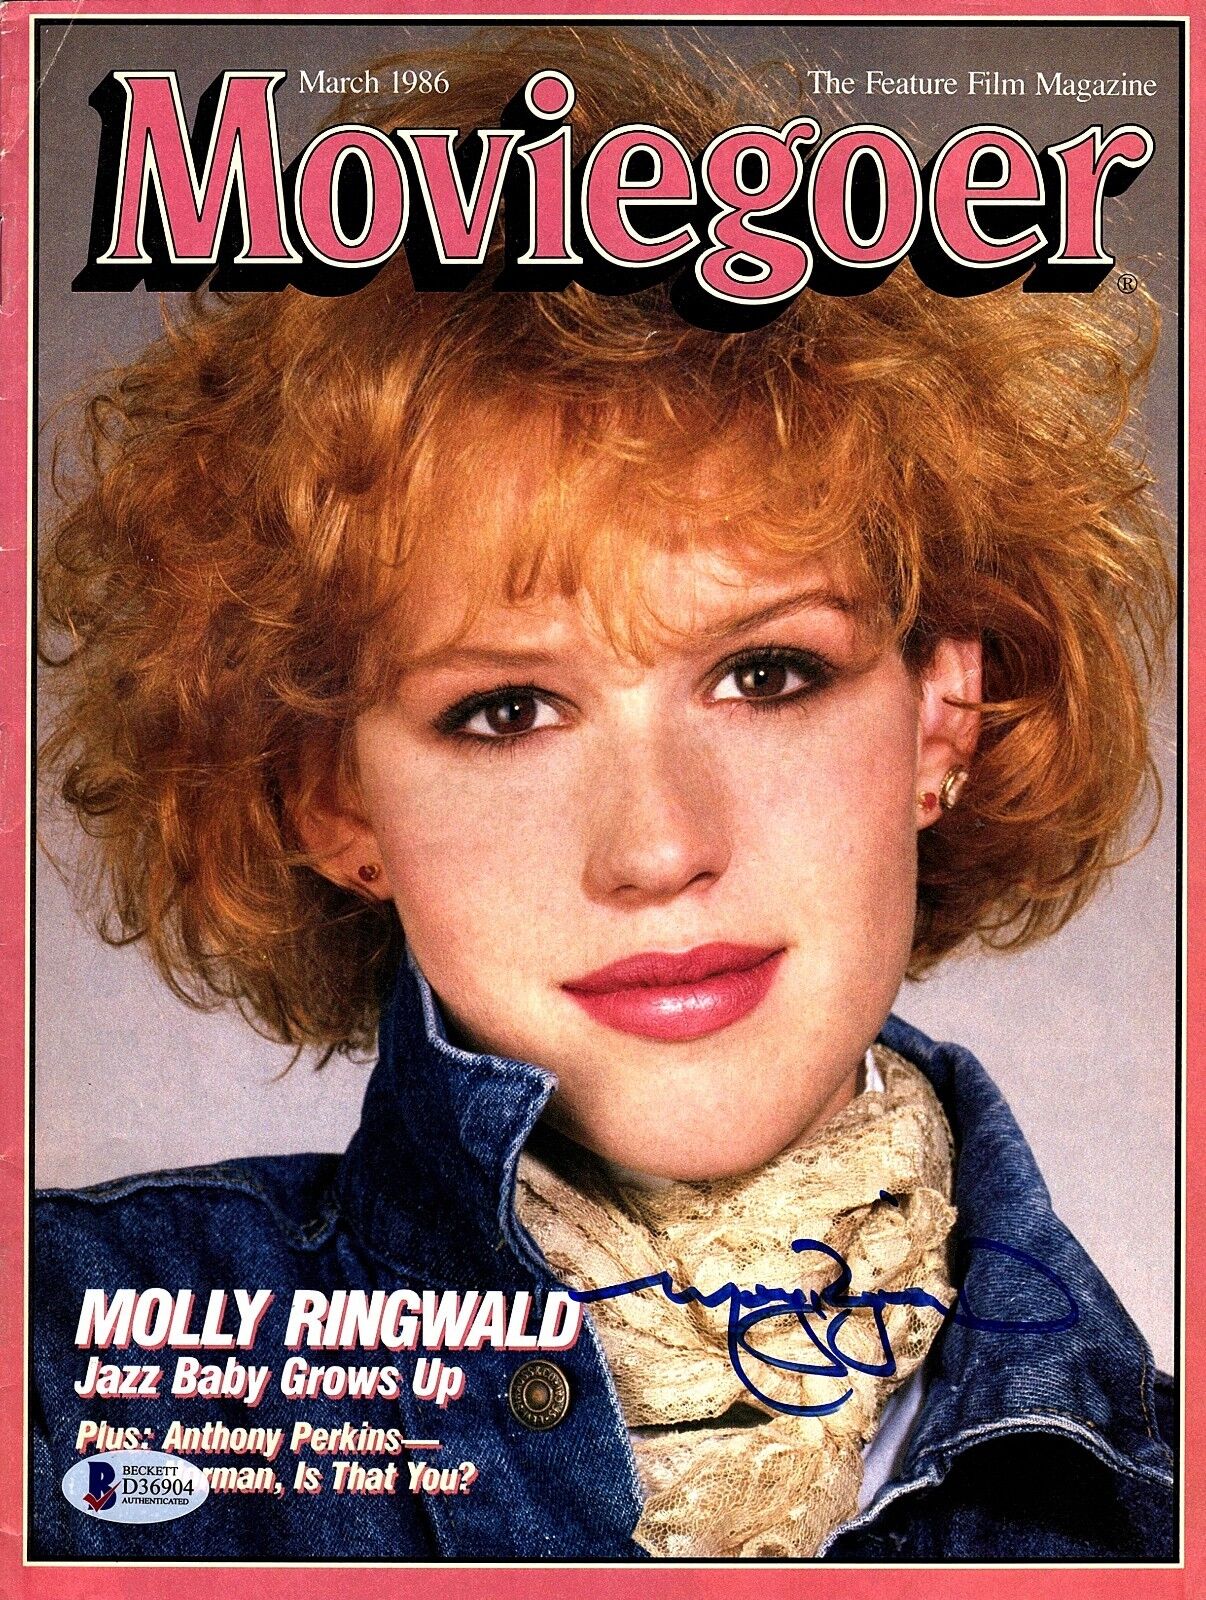 MOLLY RINGWALD Signed Autographed 1986 MOVIEGOER Magazine BECKETT BAS #D36904